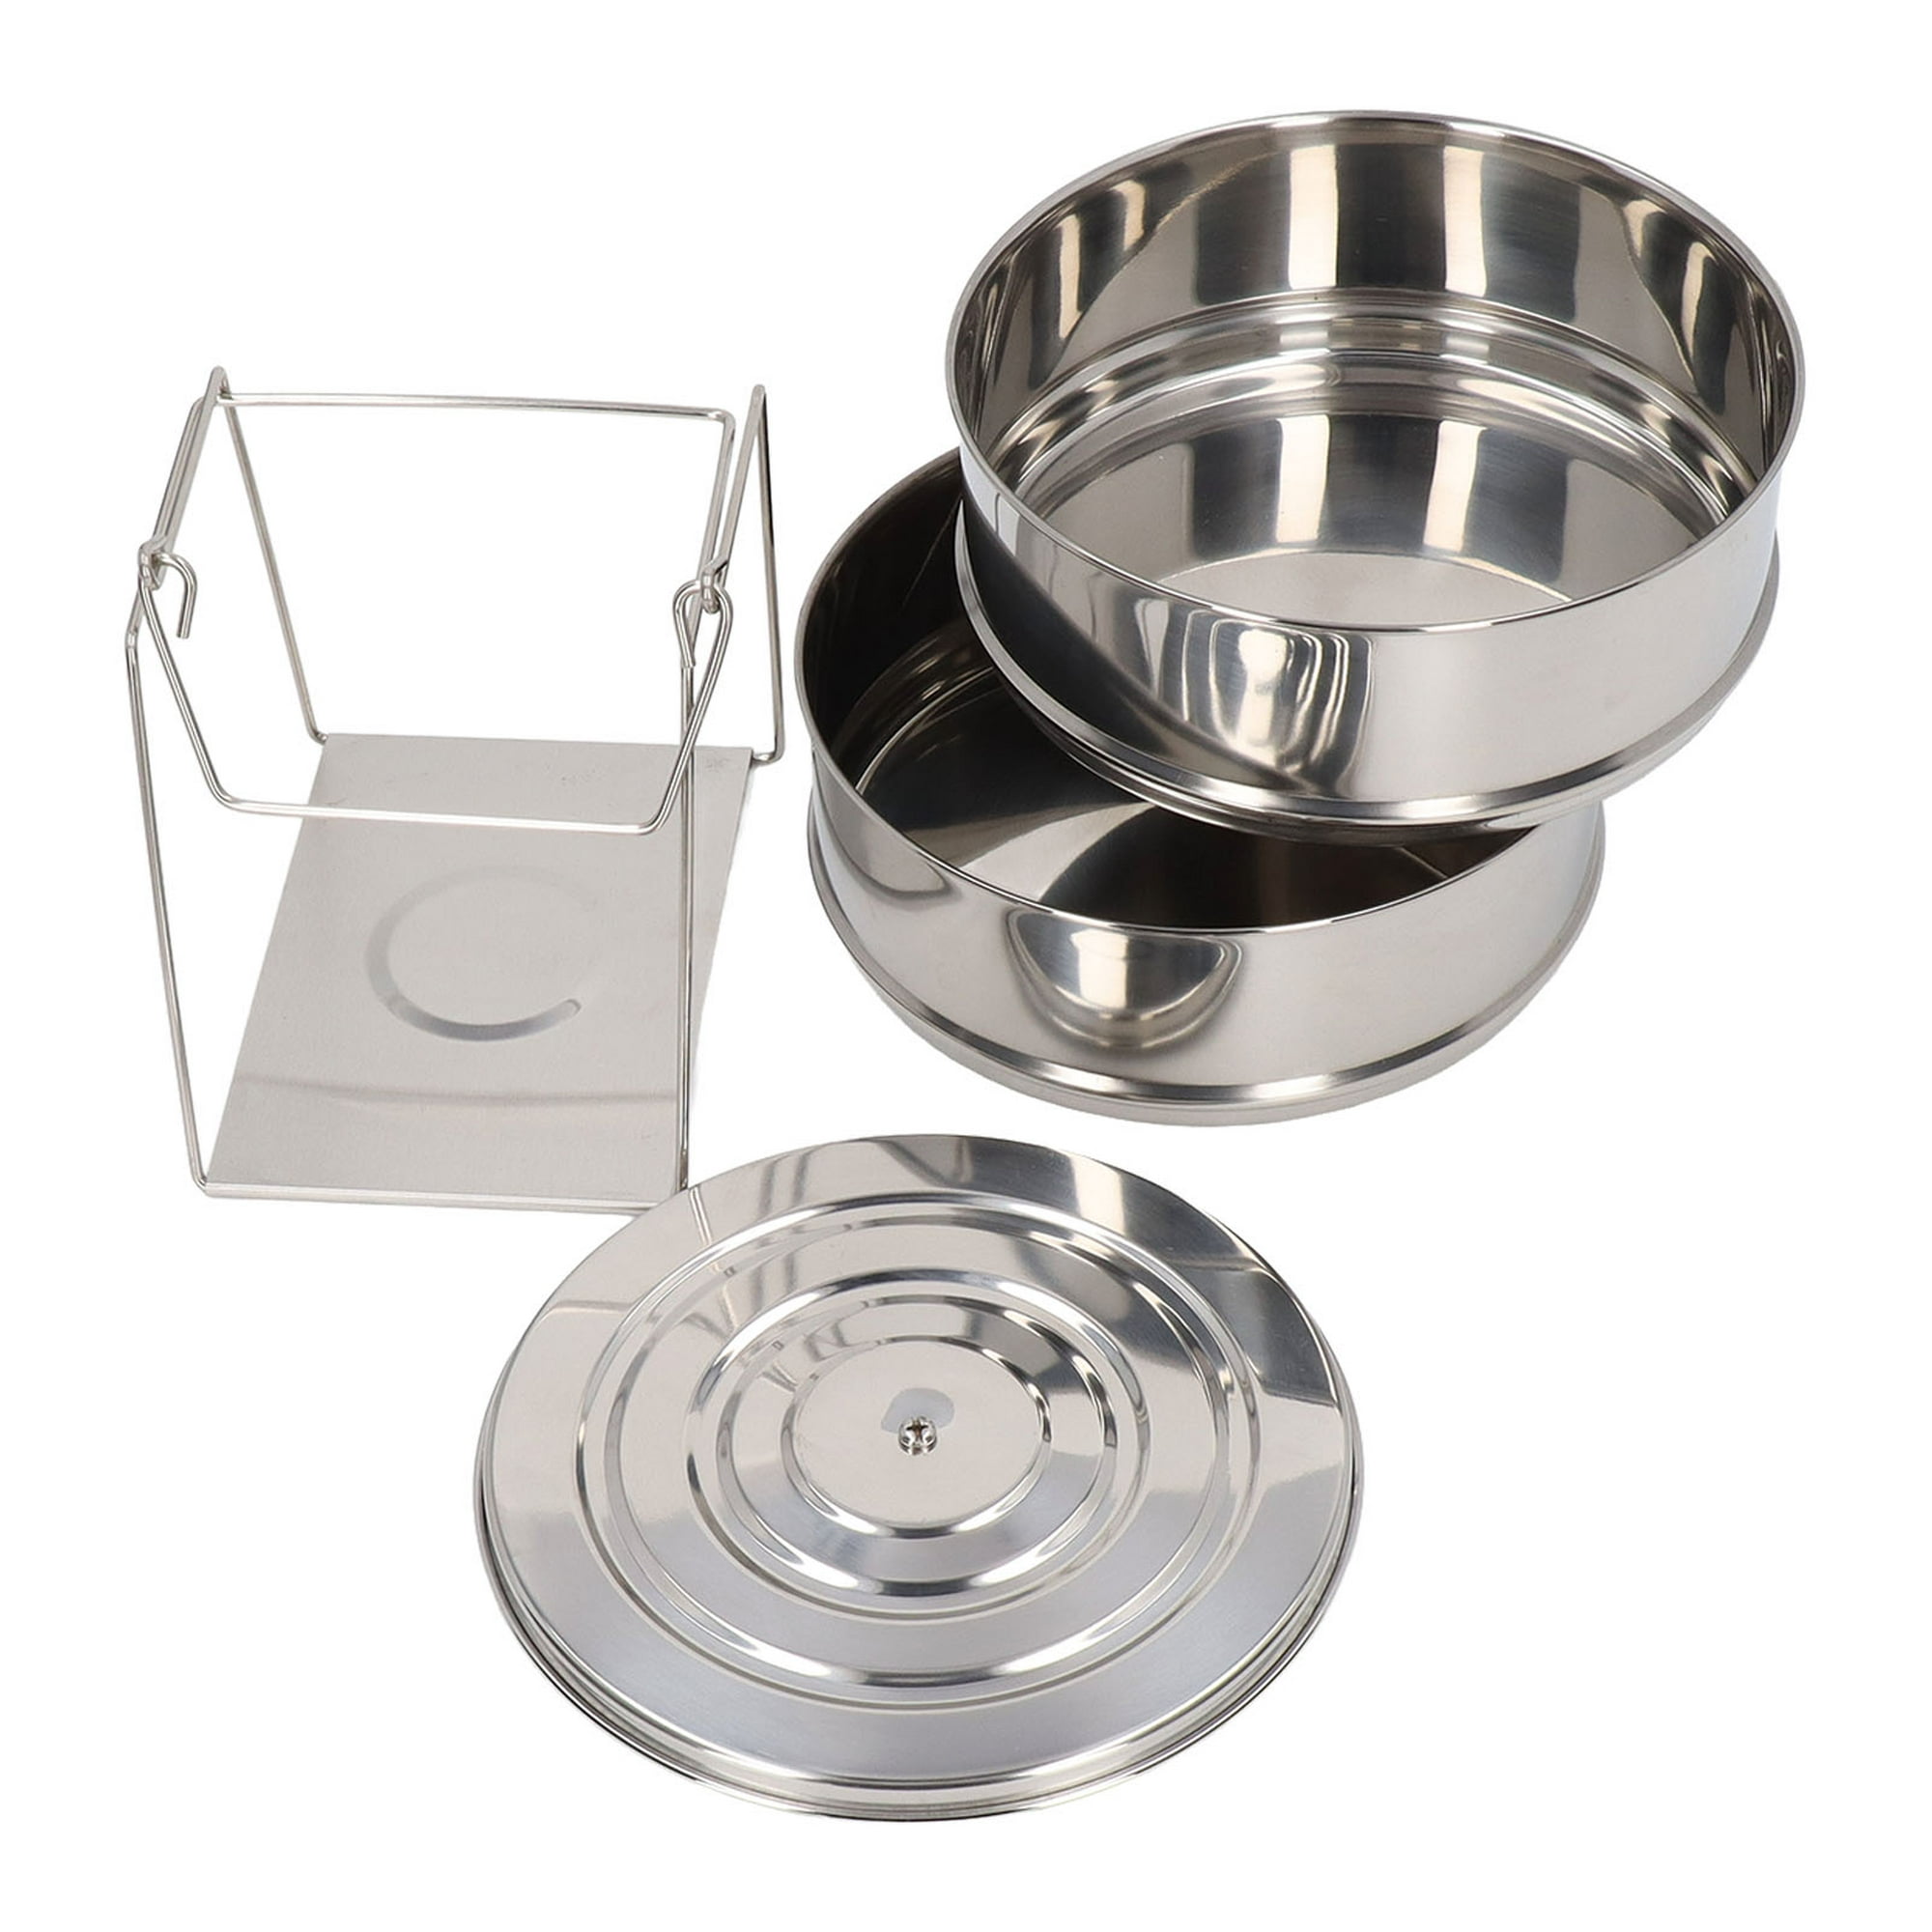 Giantex Olla de vapor de acero inoxidable de 4 capas para cocinar sopa y  cocinar al vapor de alimentos con tapa de vidrio templado, 2 septos  humeantes